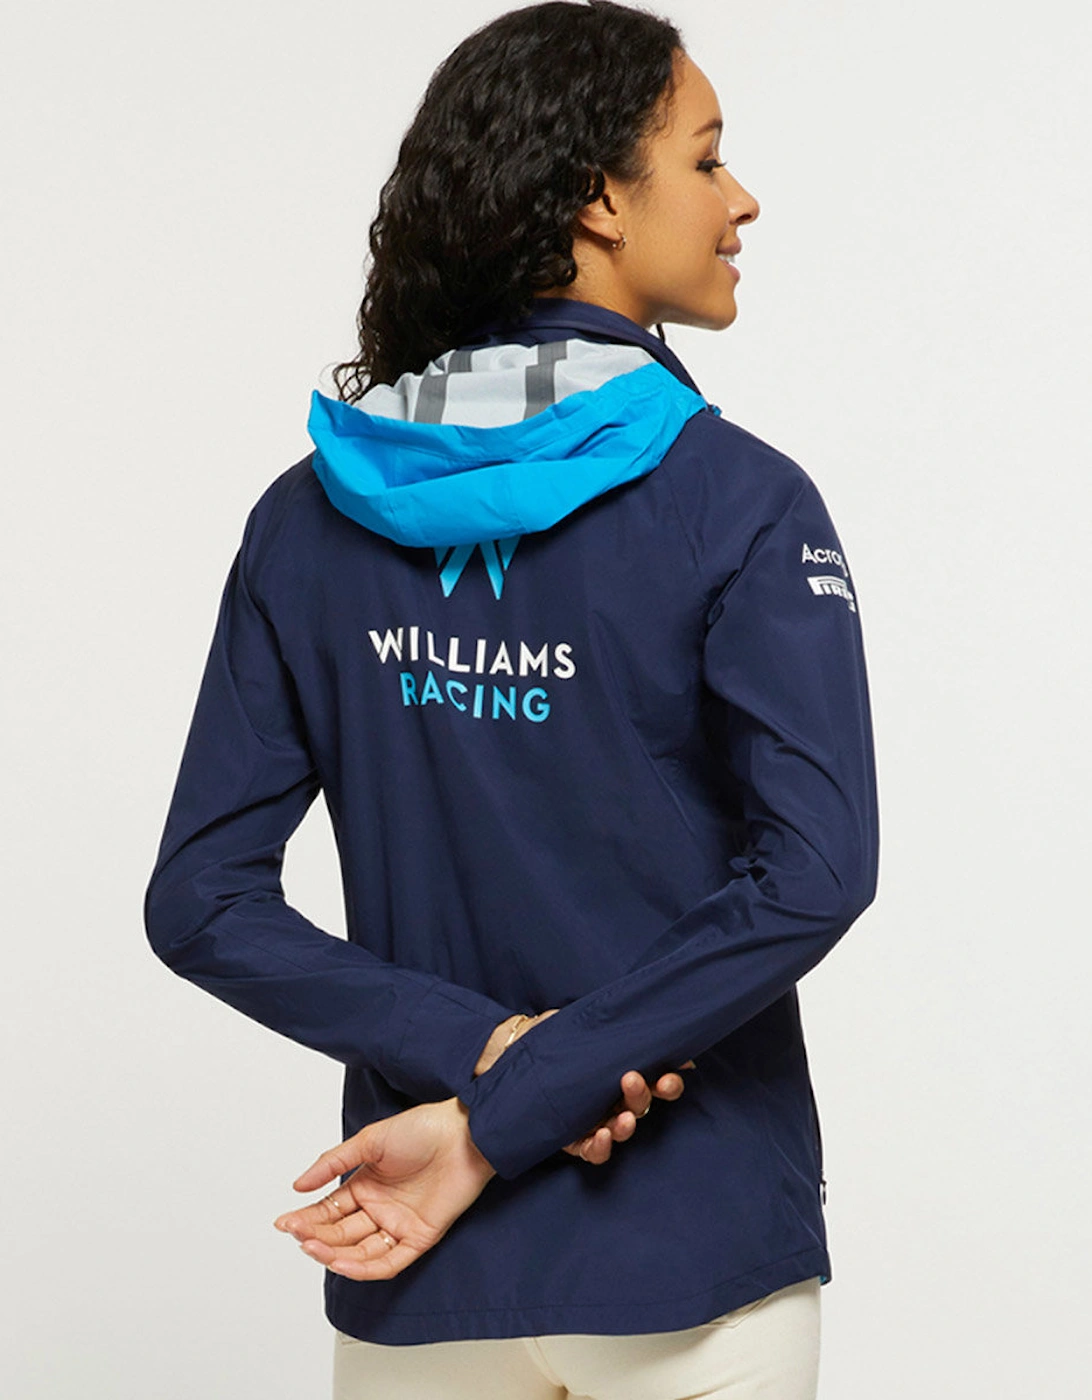 Womens/Ladies ?'23 Williams Racing Performance Jacket